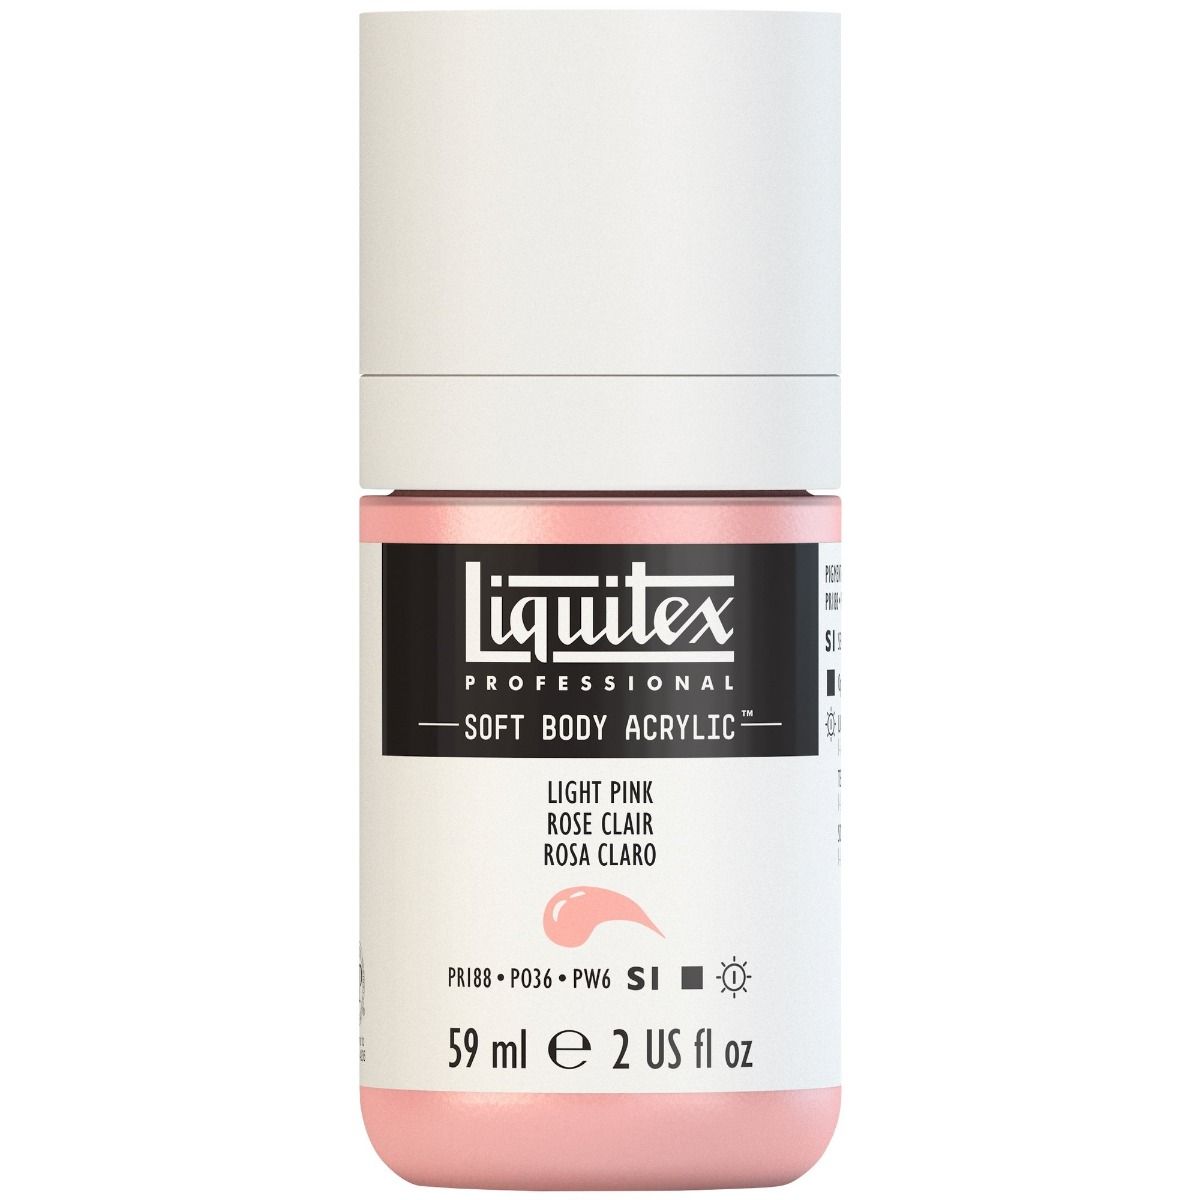 Liquitex Soft Body Acrylic, 810 Light Pink, 2-oz